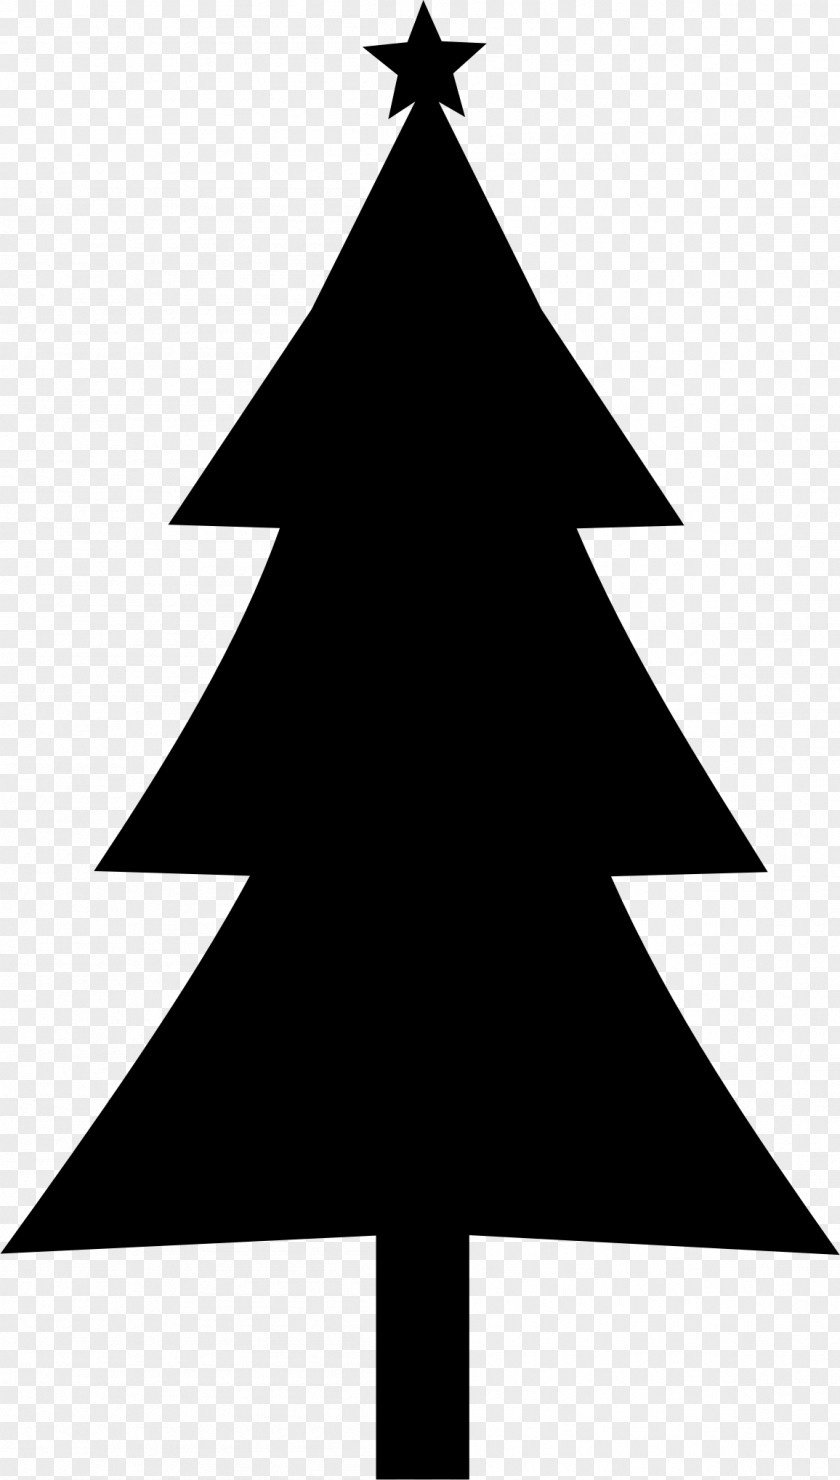 Fir-tree Christmas Tree Silhouette Clip Art PNG